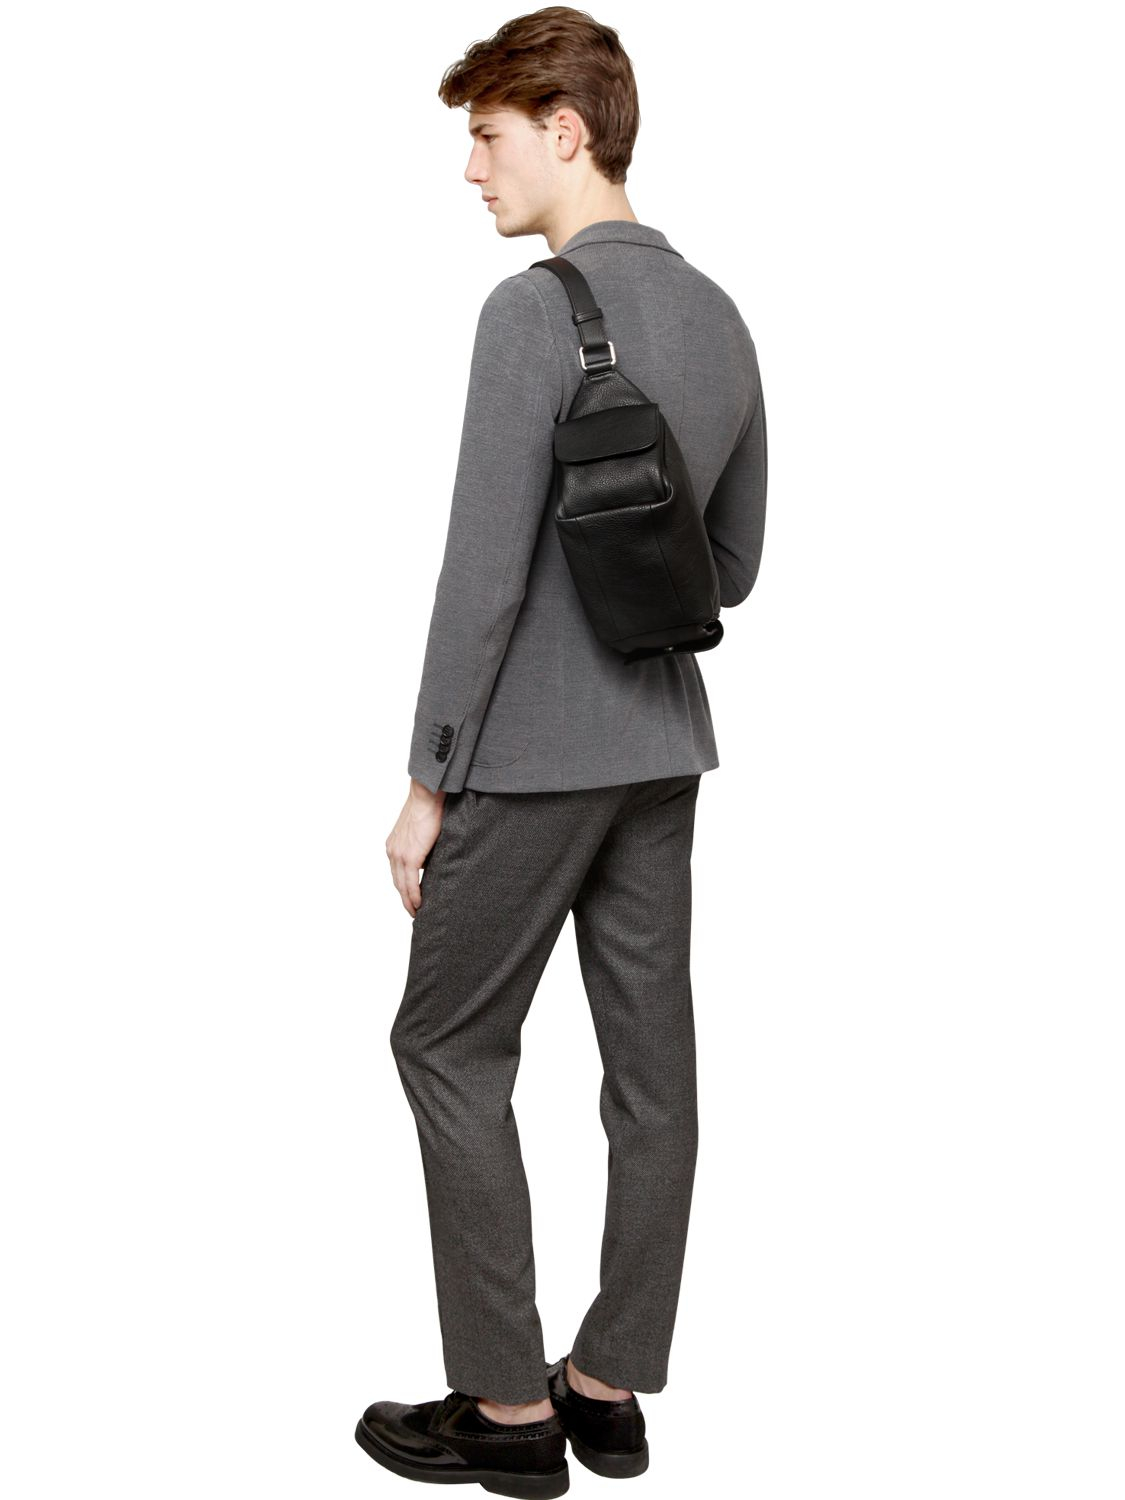 Giorgio Armani Bull Leather Crossbody Bag in Black for Men - Lyst